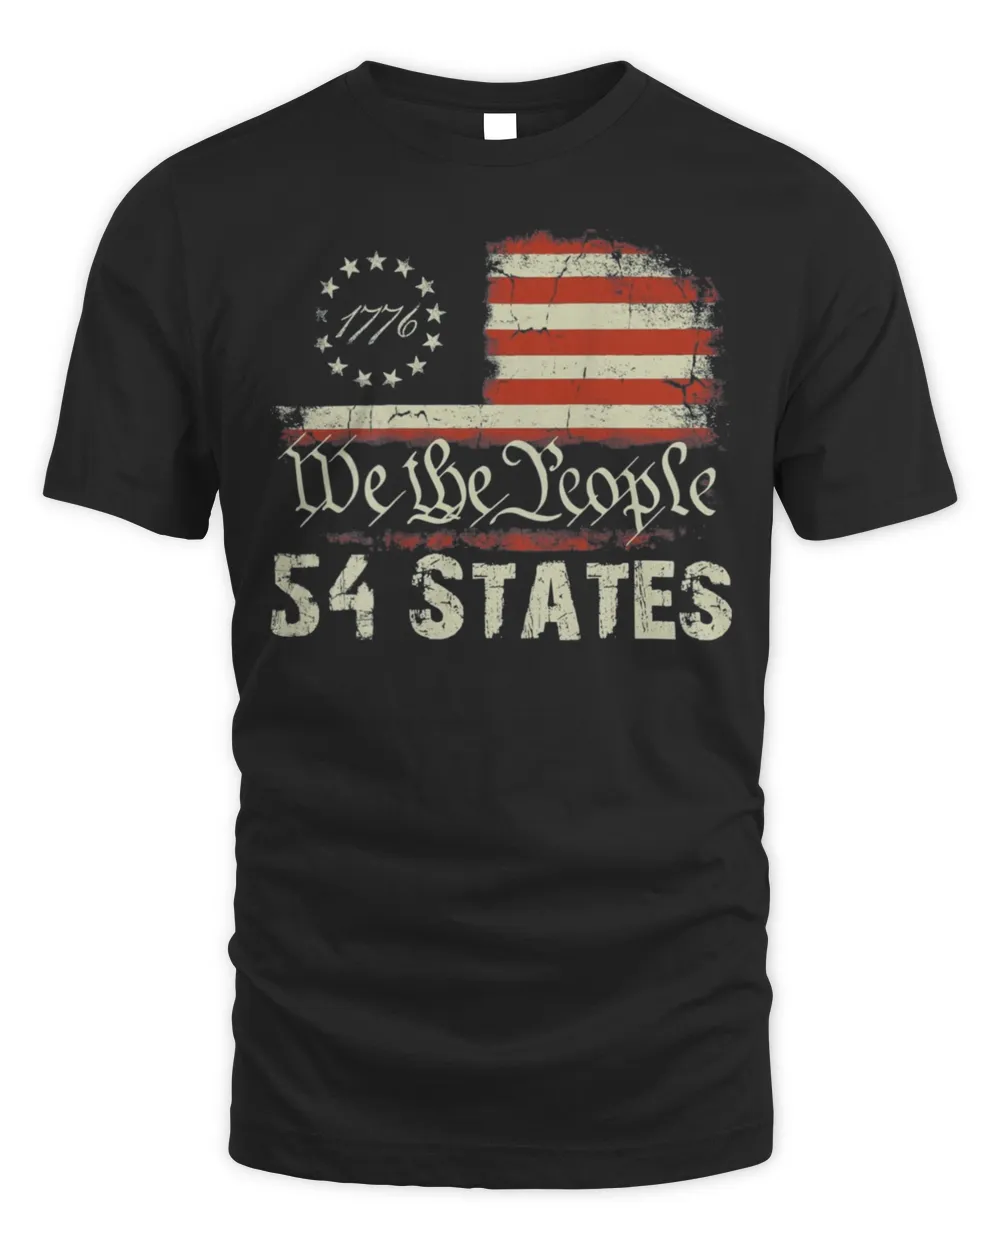 54 States USA American Flag Funny Joe Biden Gaff Shirt Unisex Standard T-Shirt black xl